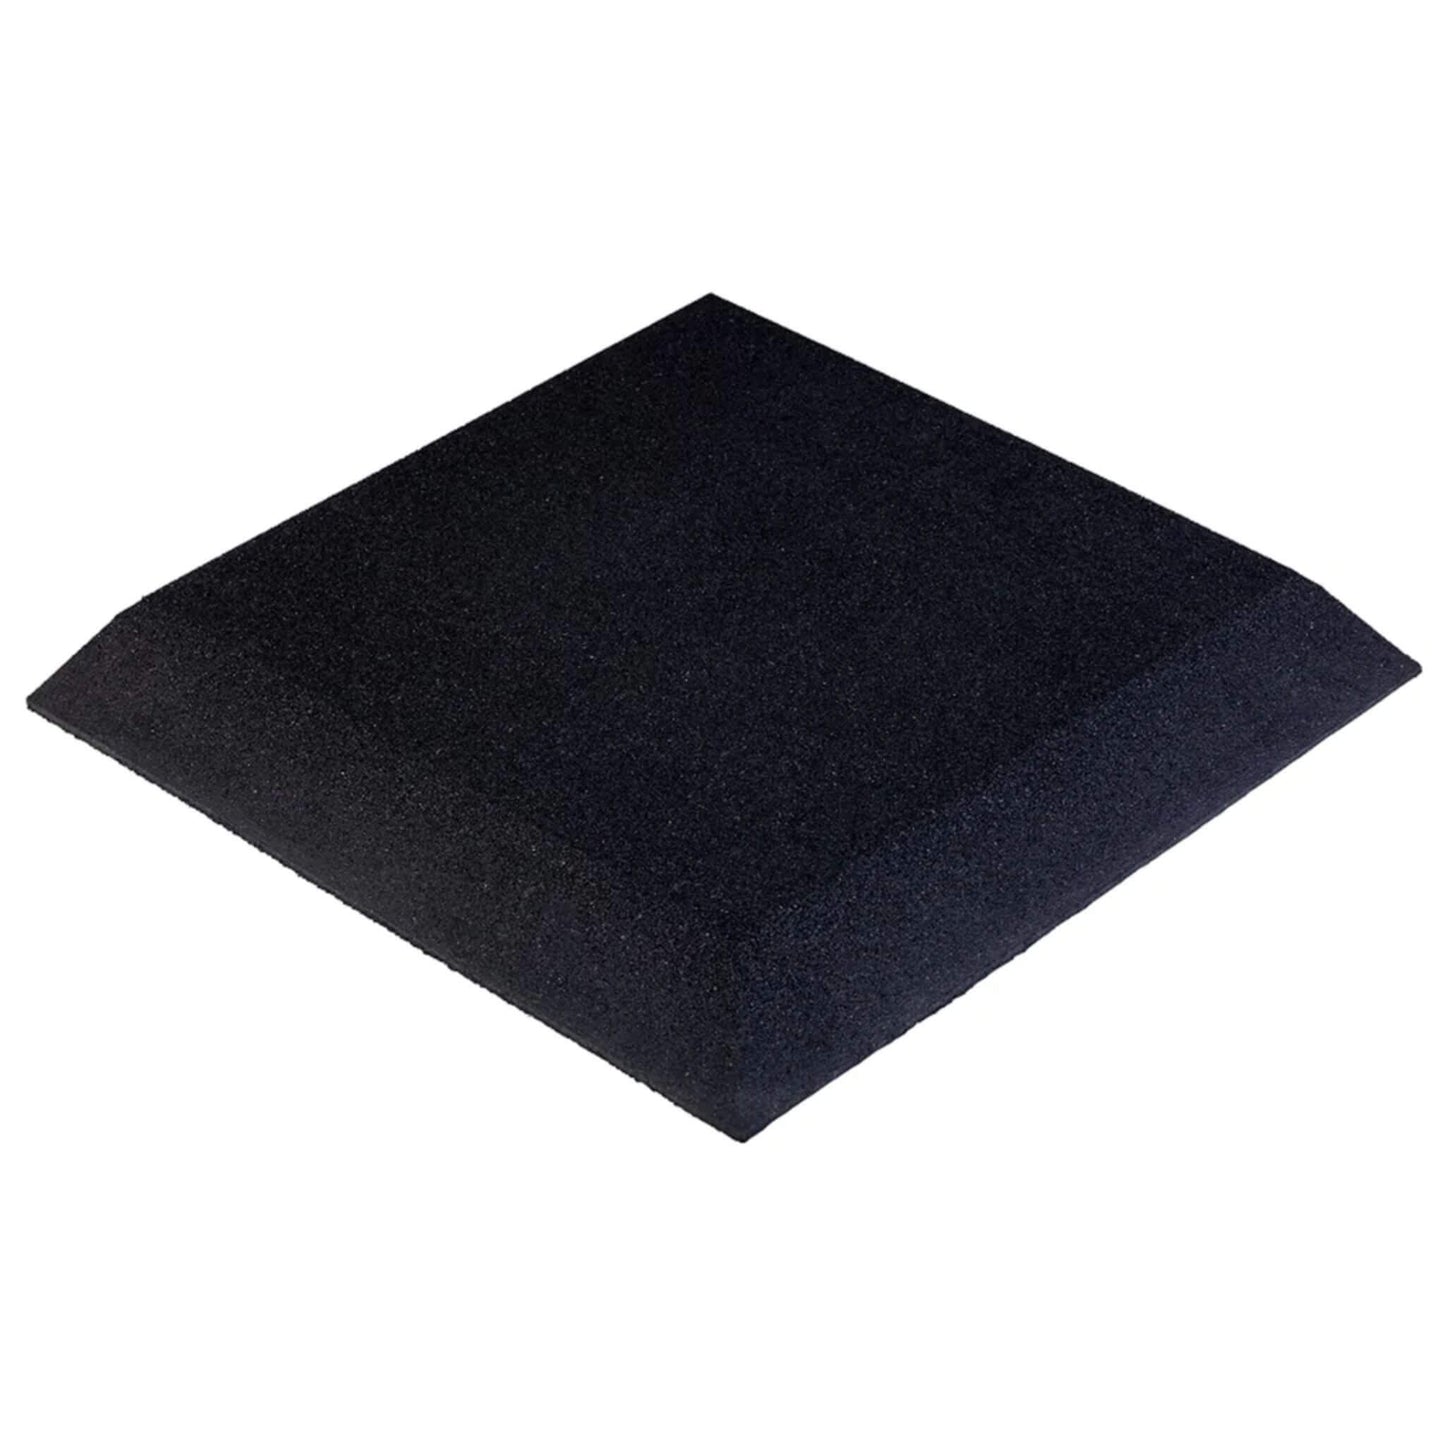 Activ Gym Flooring Tiles (Black) 50cm x 50cm x 15mm corner